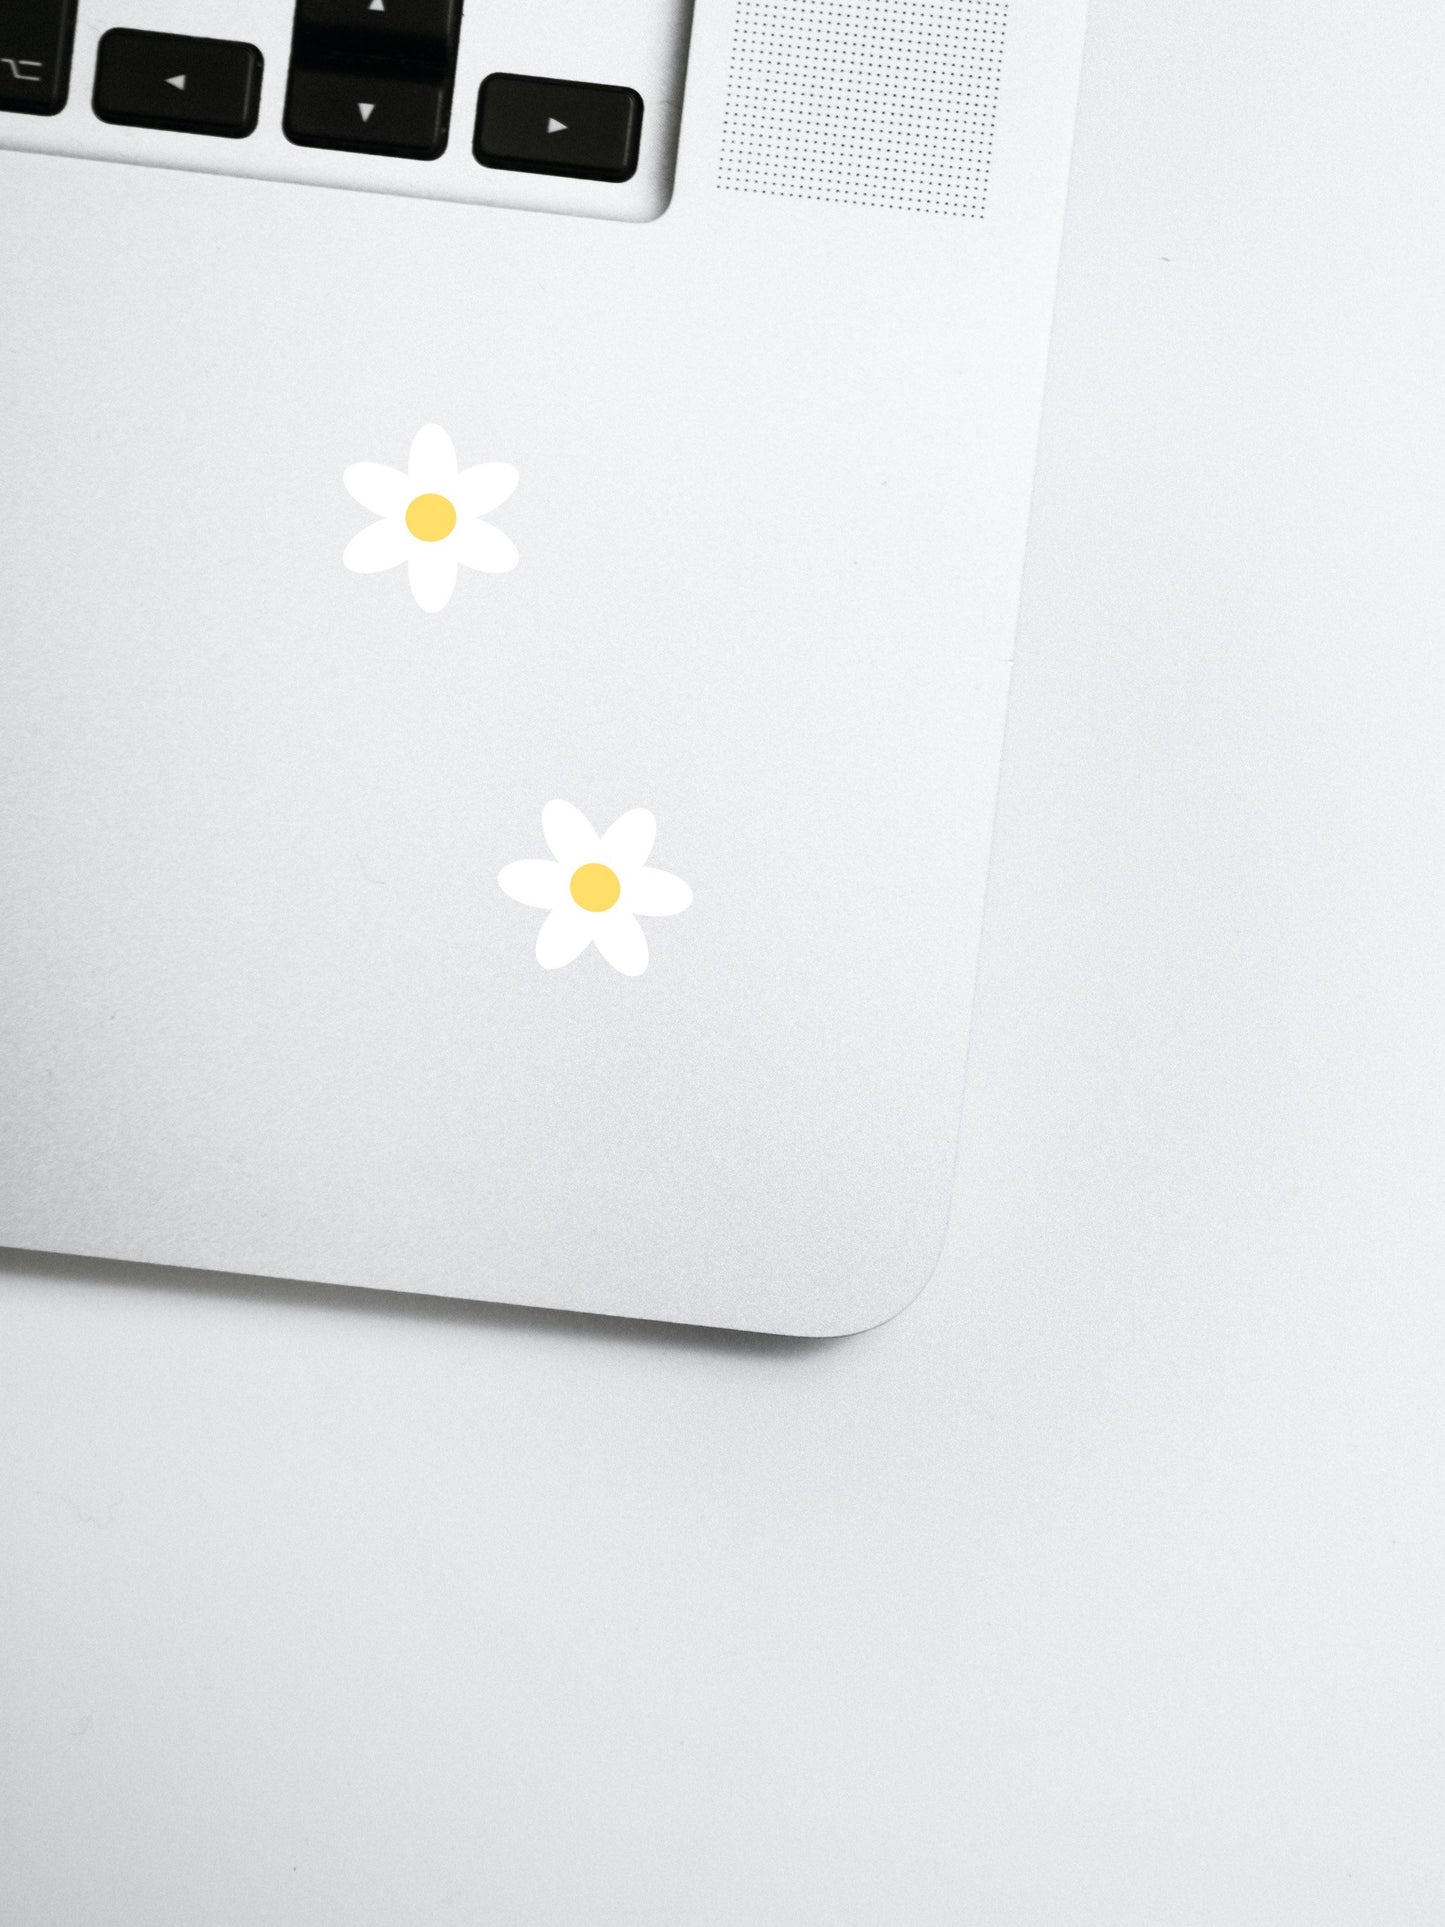 Mini White Daisy Flower Sticker Sheet Cute Small Flower Stickers